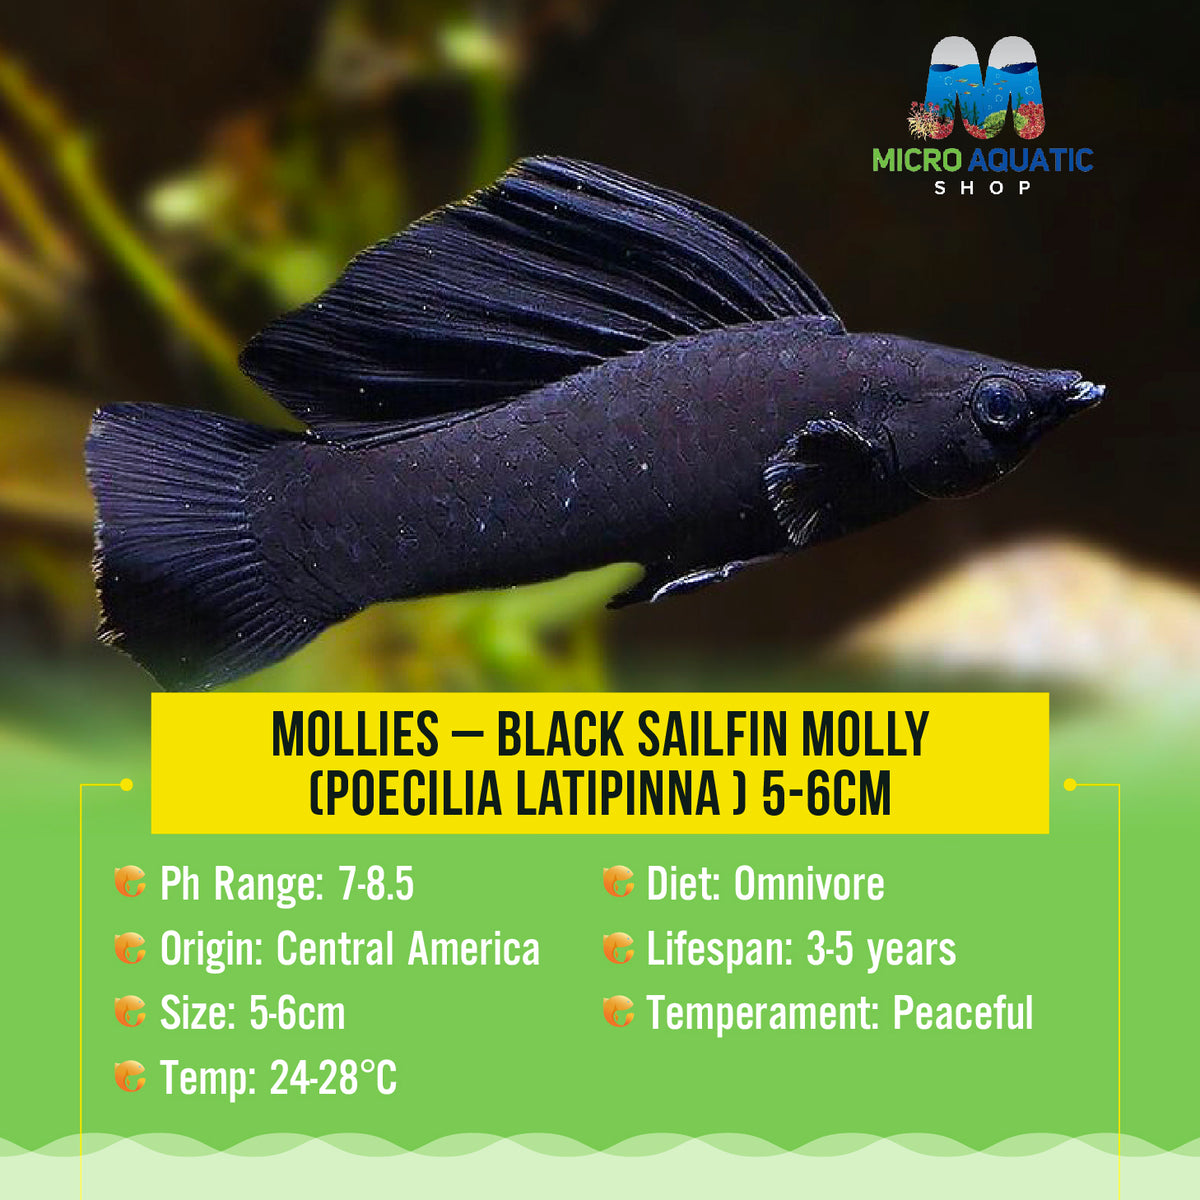 Mollies – Black Sailfin Molly  (Poecilia latipinna ) 5-6cm